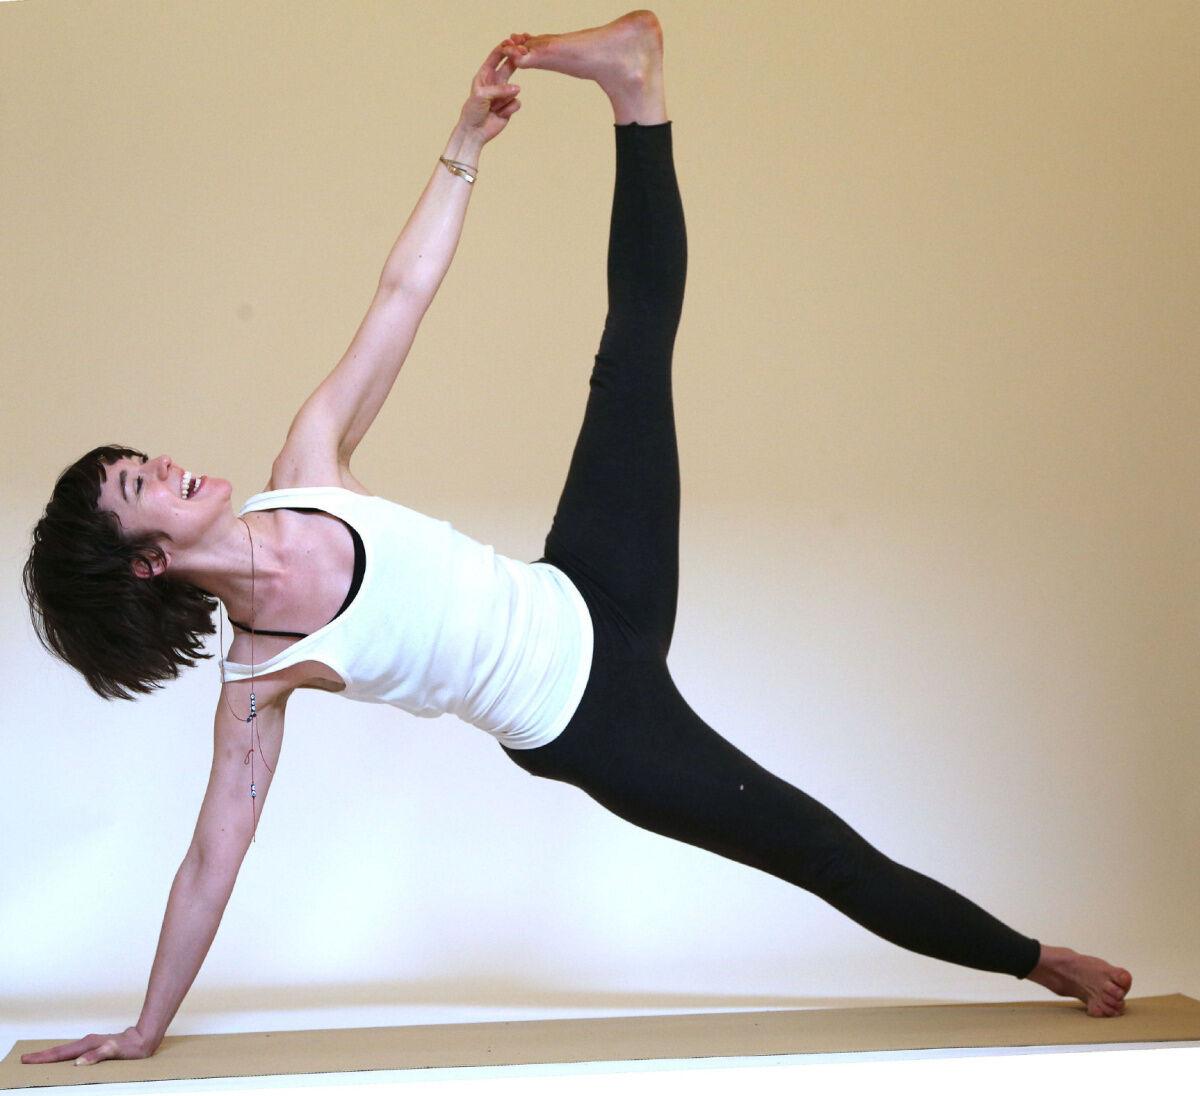 Yoga and Pilates classes at Union Yoga + Wellness, Toronto (home page)